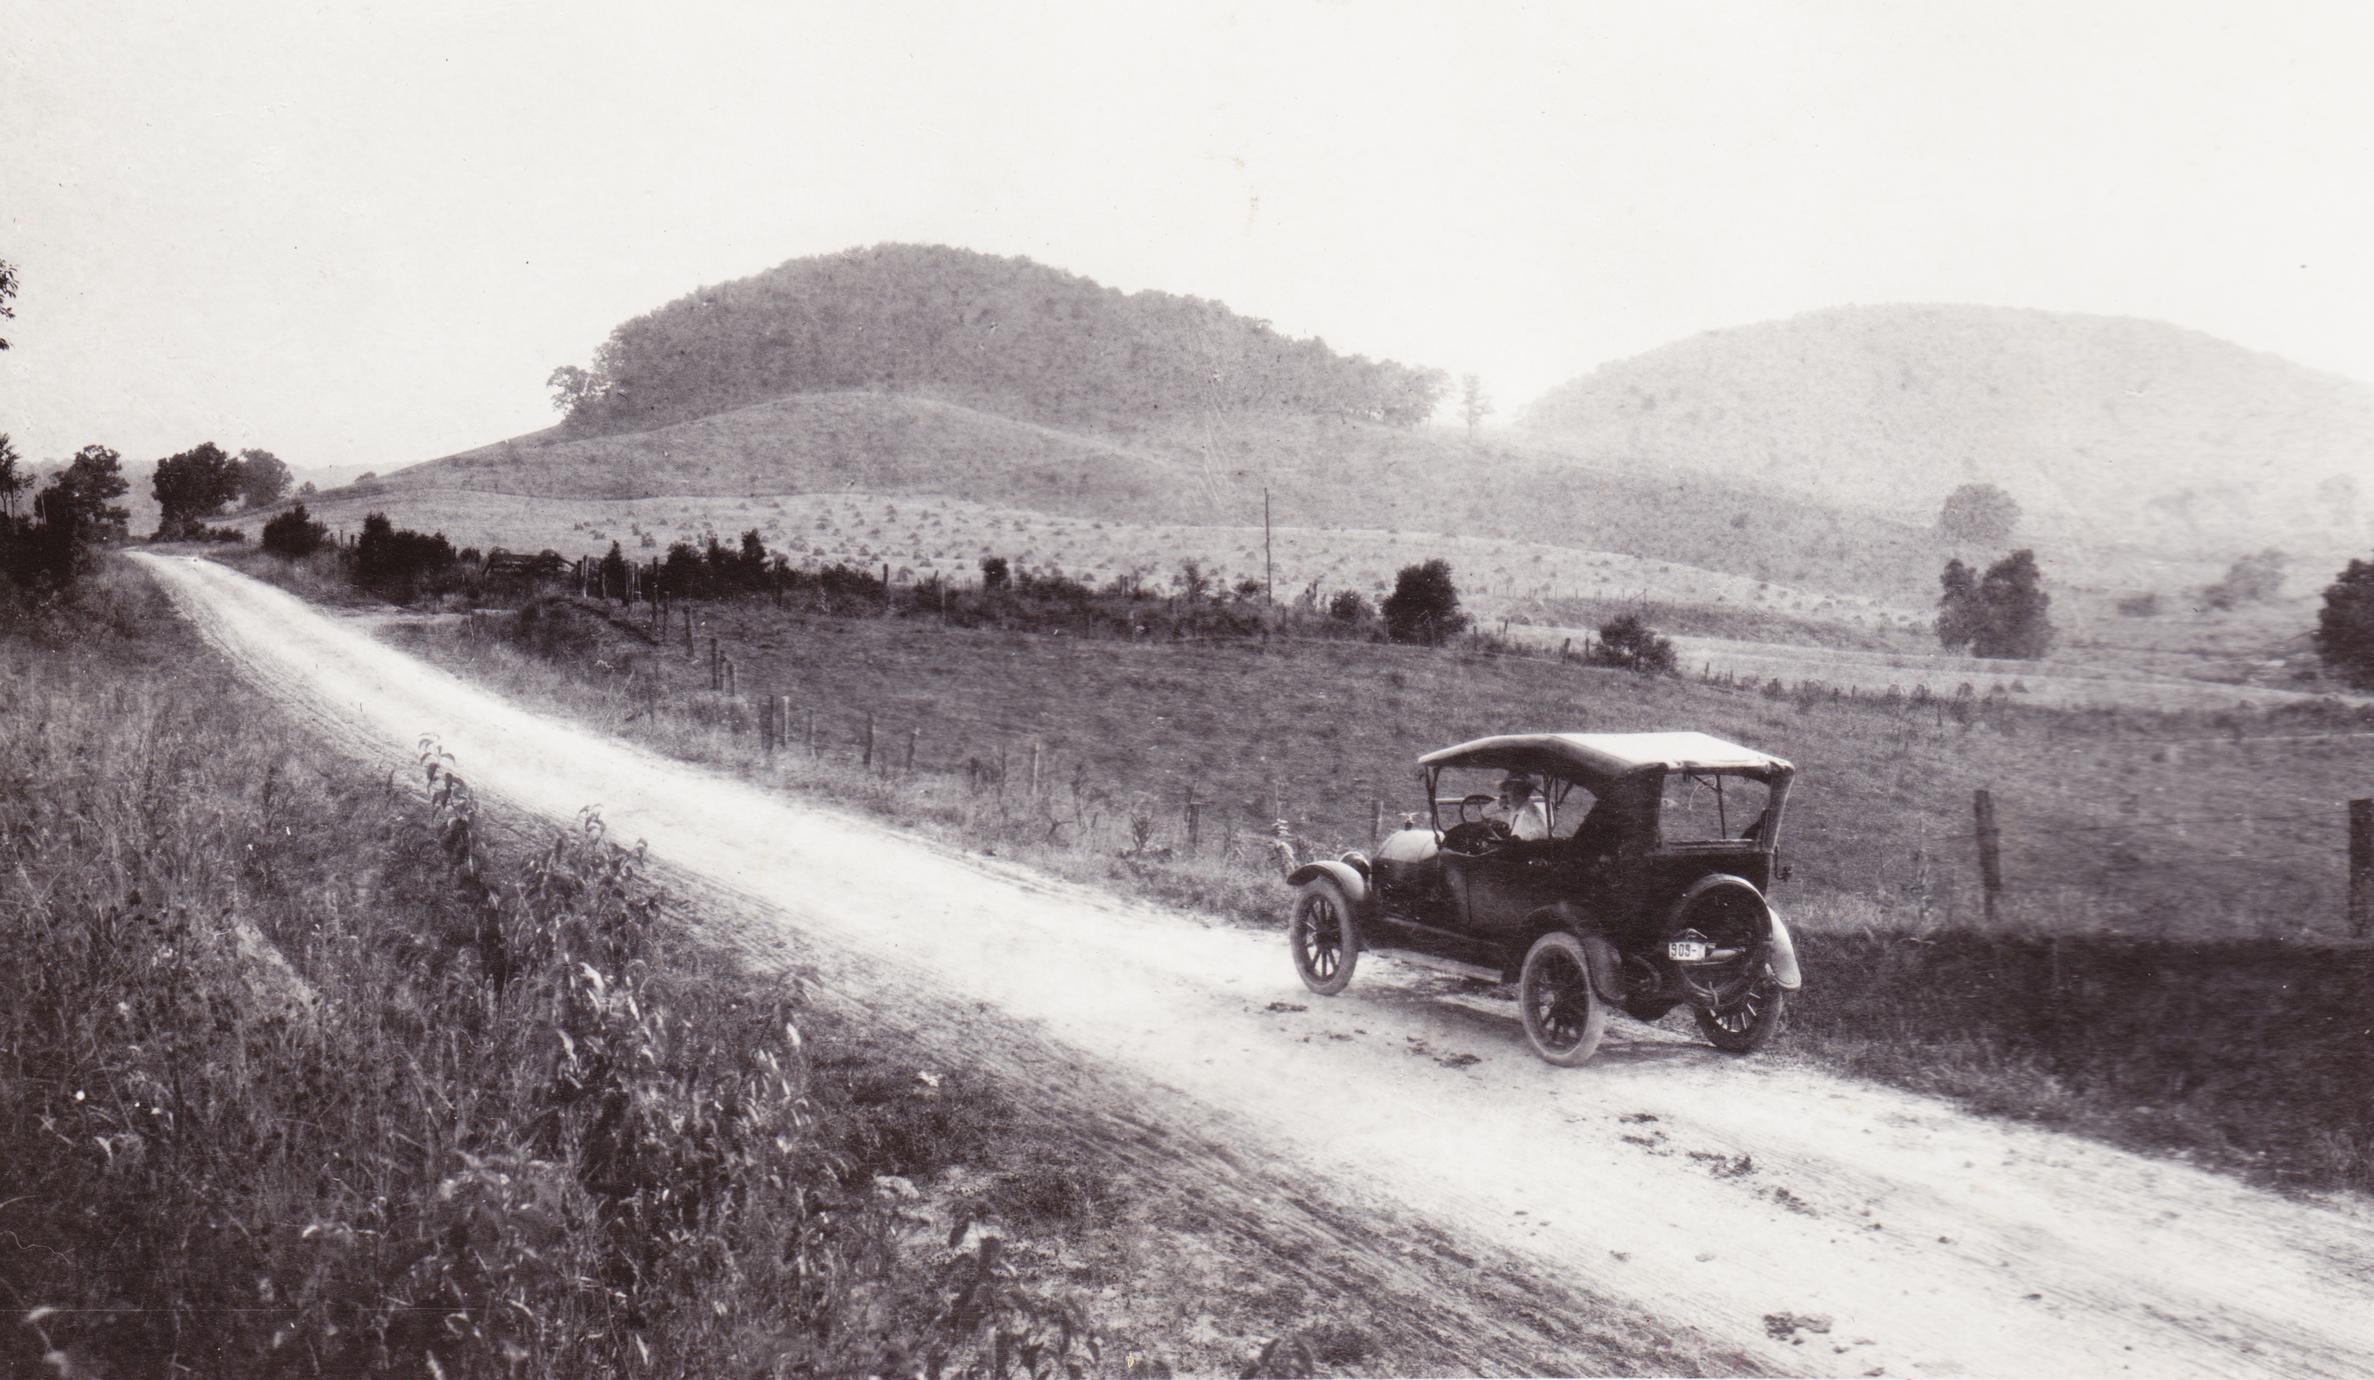 Road near a hillside